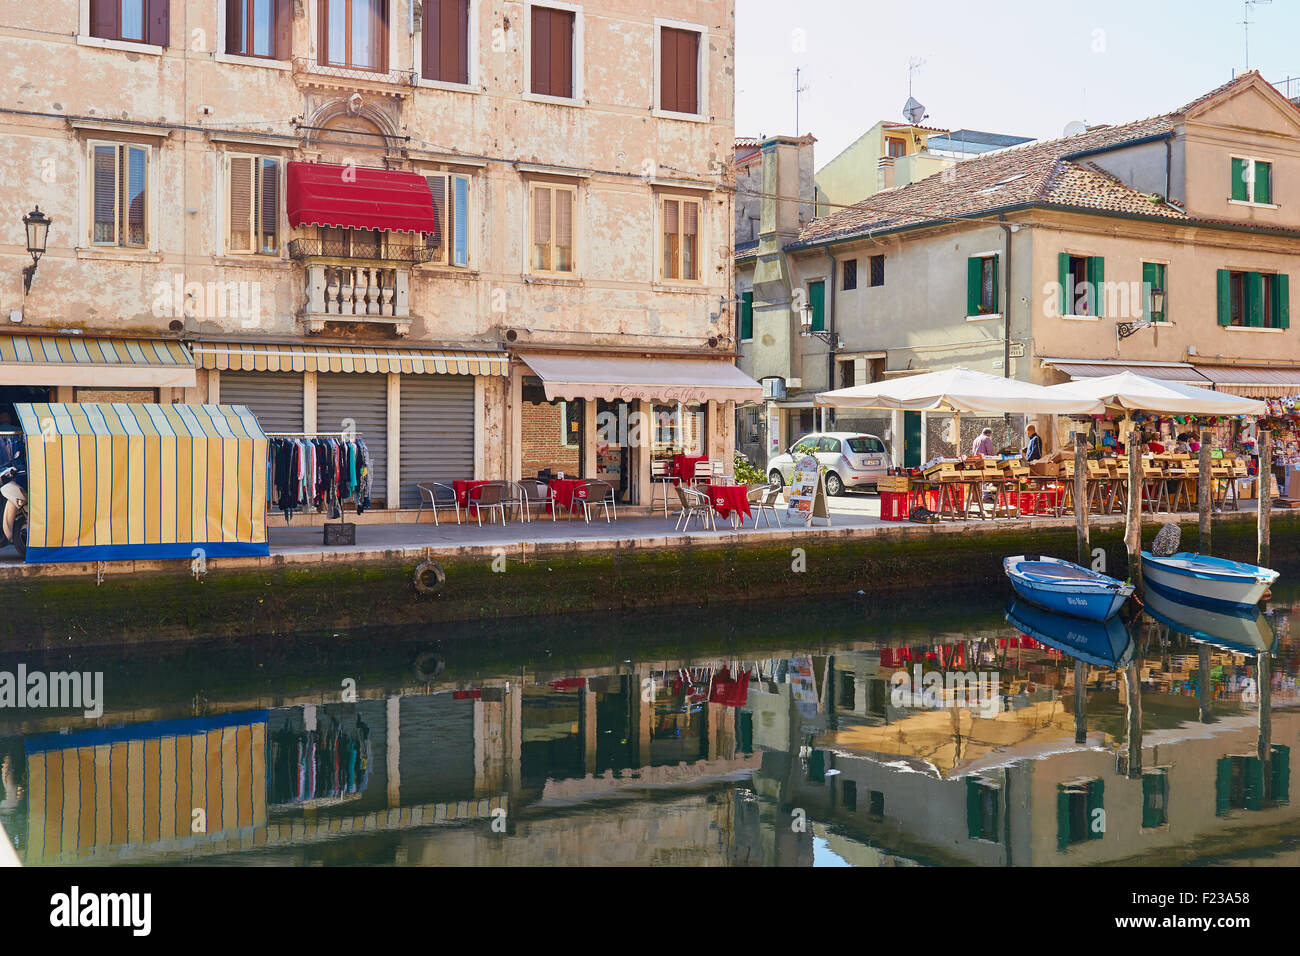 Canalside market stalls and cafes Chioggia Venetian Lagoon Veneto Italy Europe Stock Photo